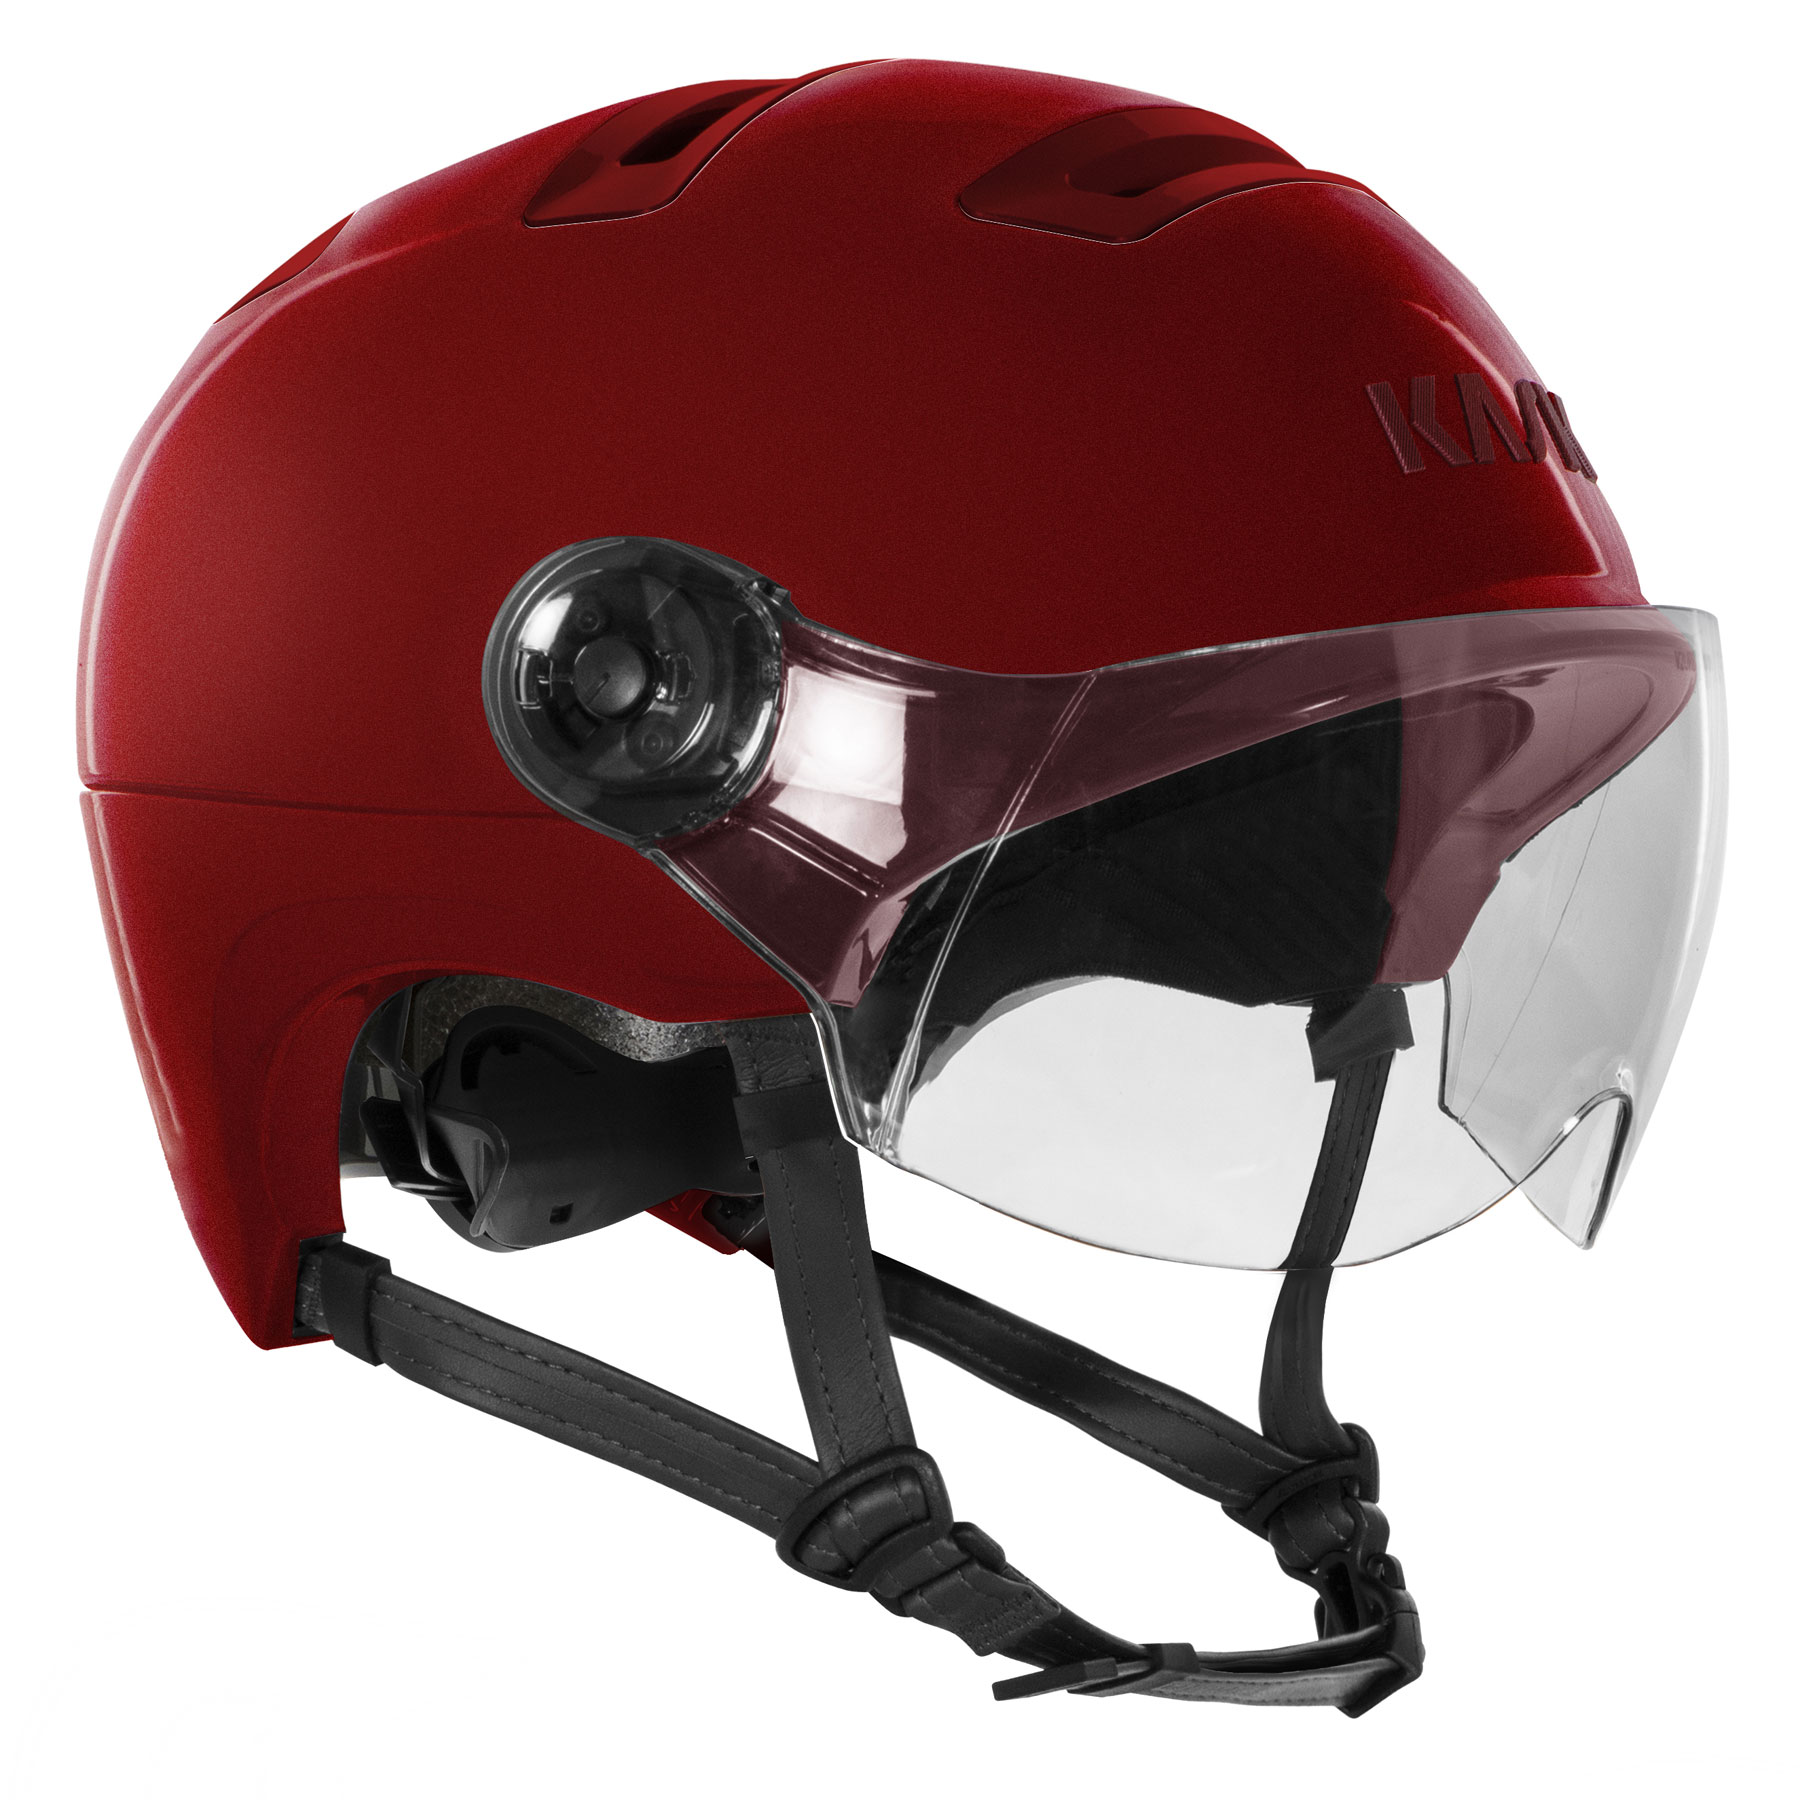 Picture of KASK Urban R WG11 Helmet - Bordeaux